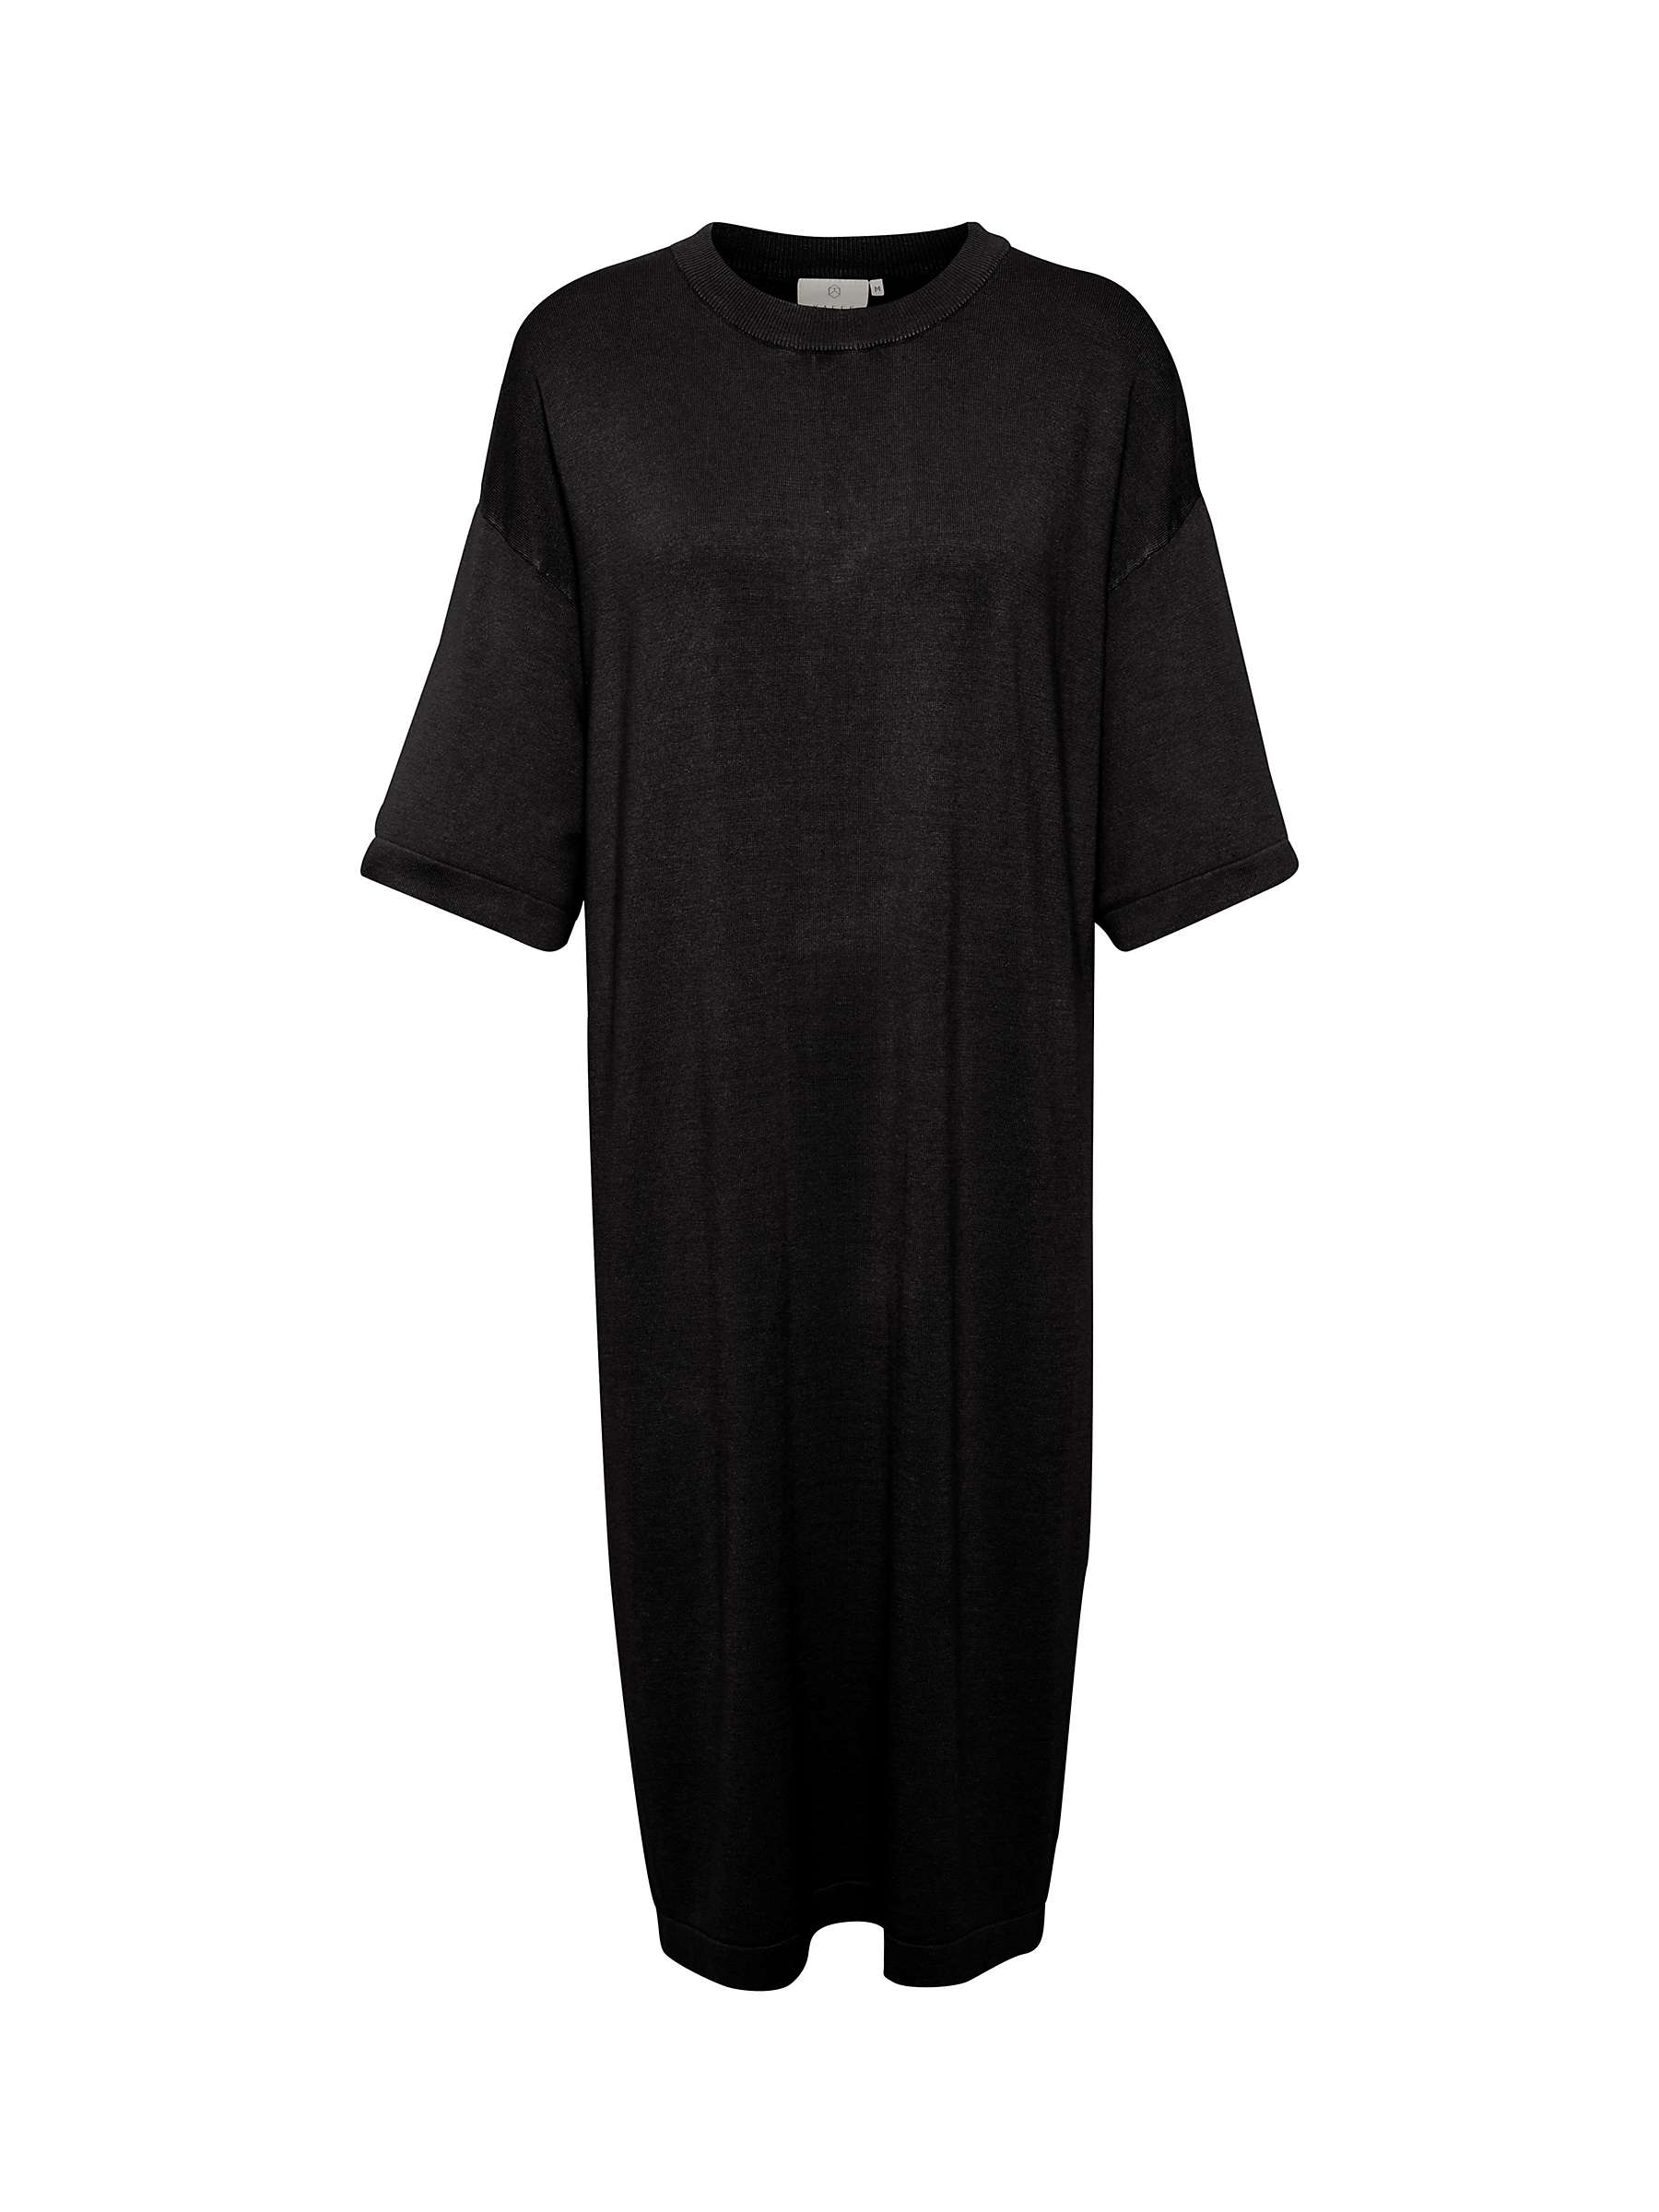 KAFFE Fenia Knitted Midi Dress, Black at John Lewis & Partners